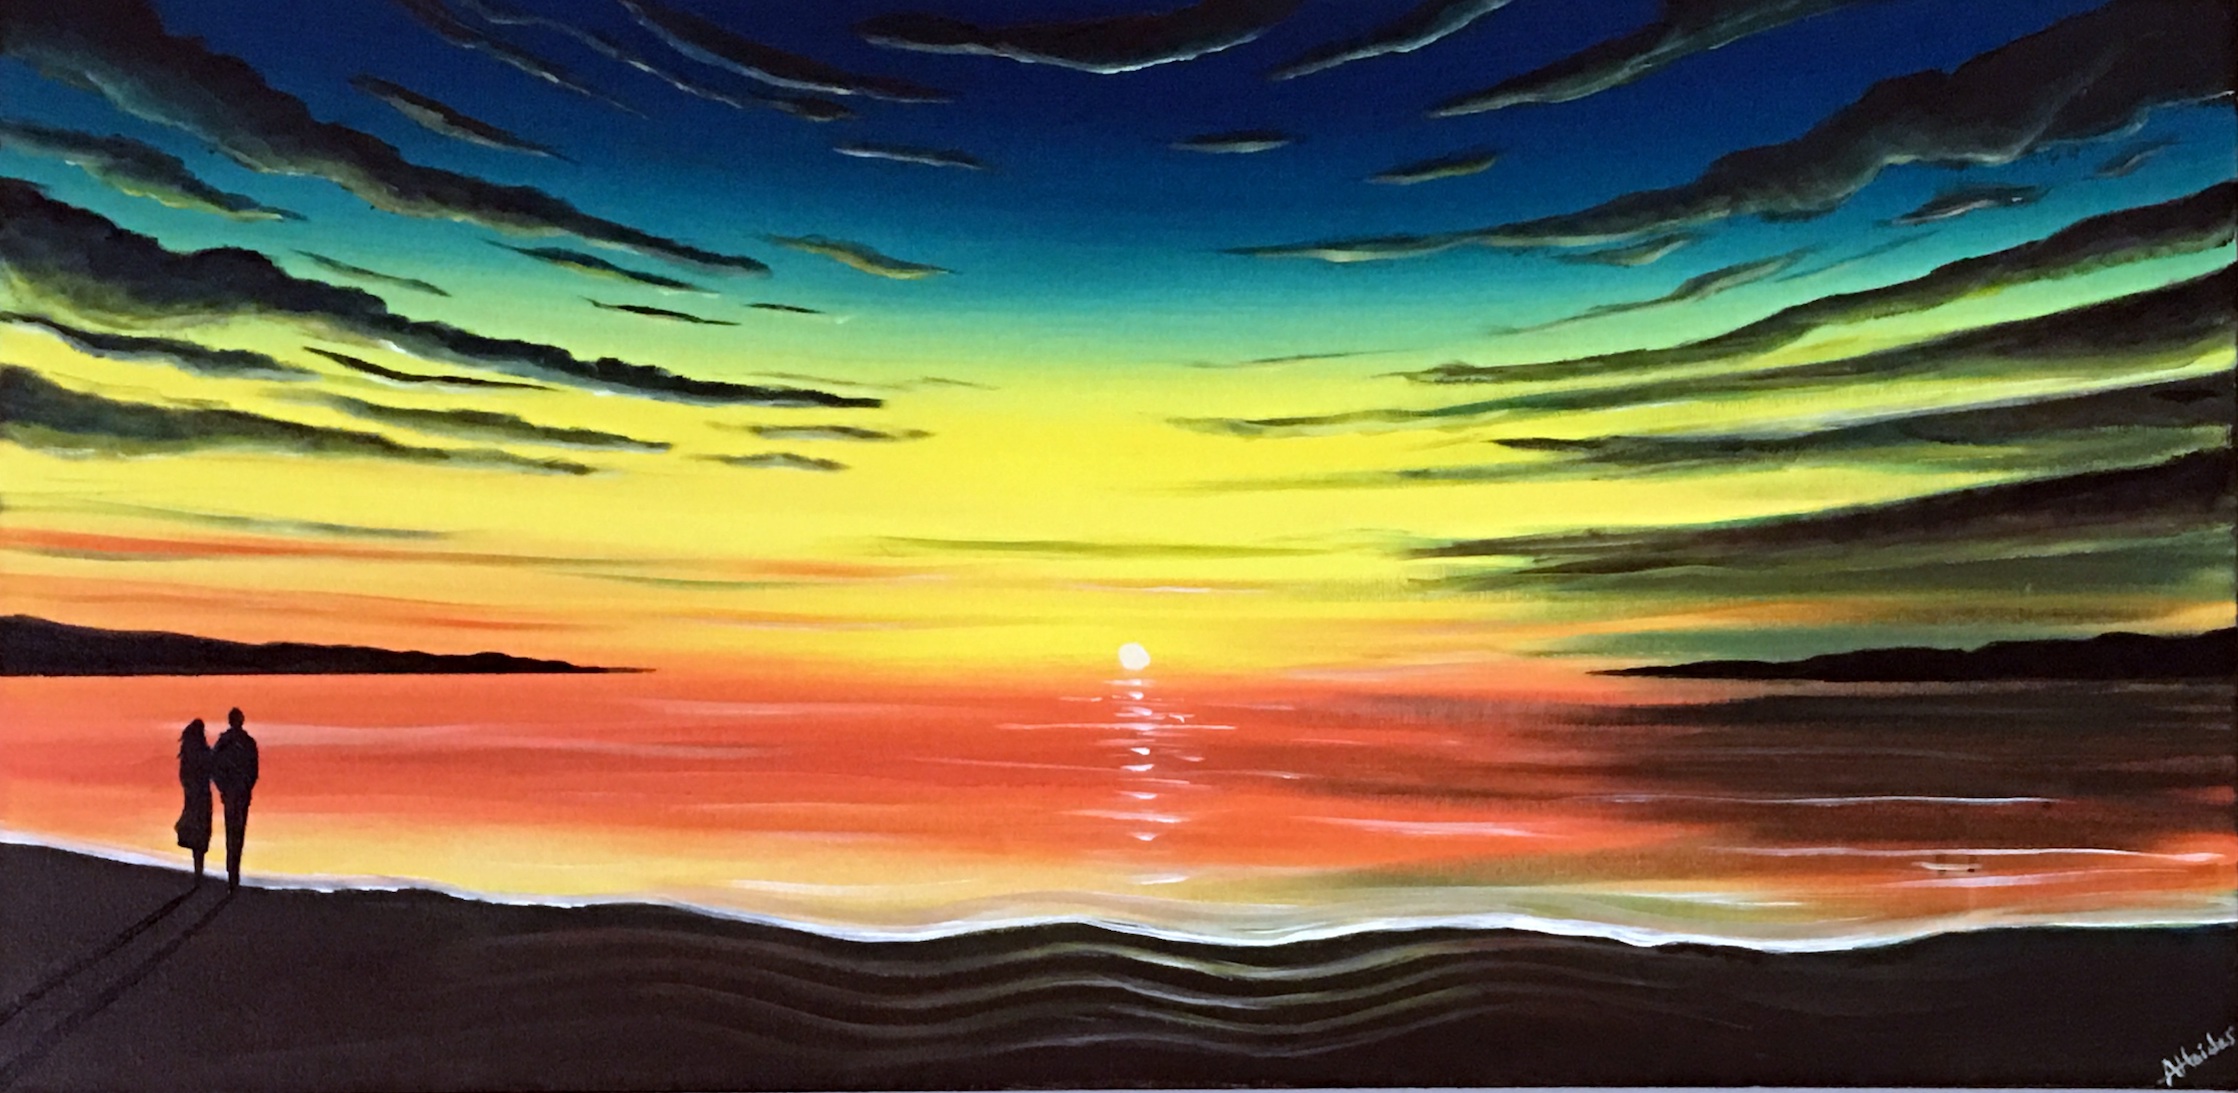 Magnificent Sunset 5 - ArtMarketDirect